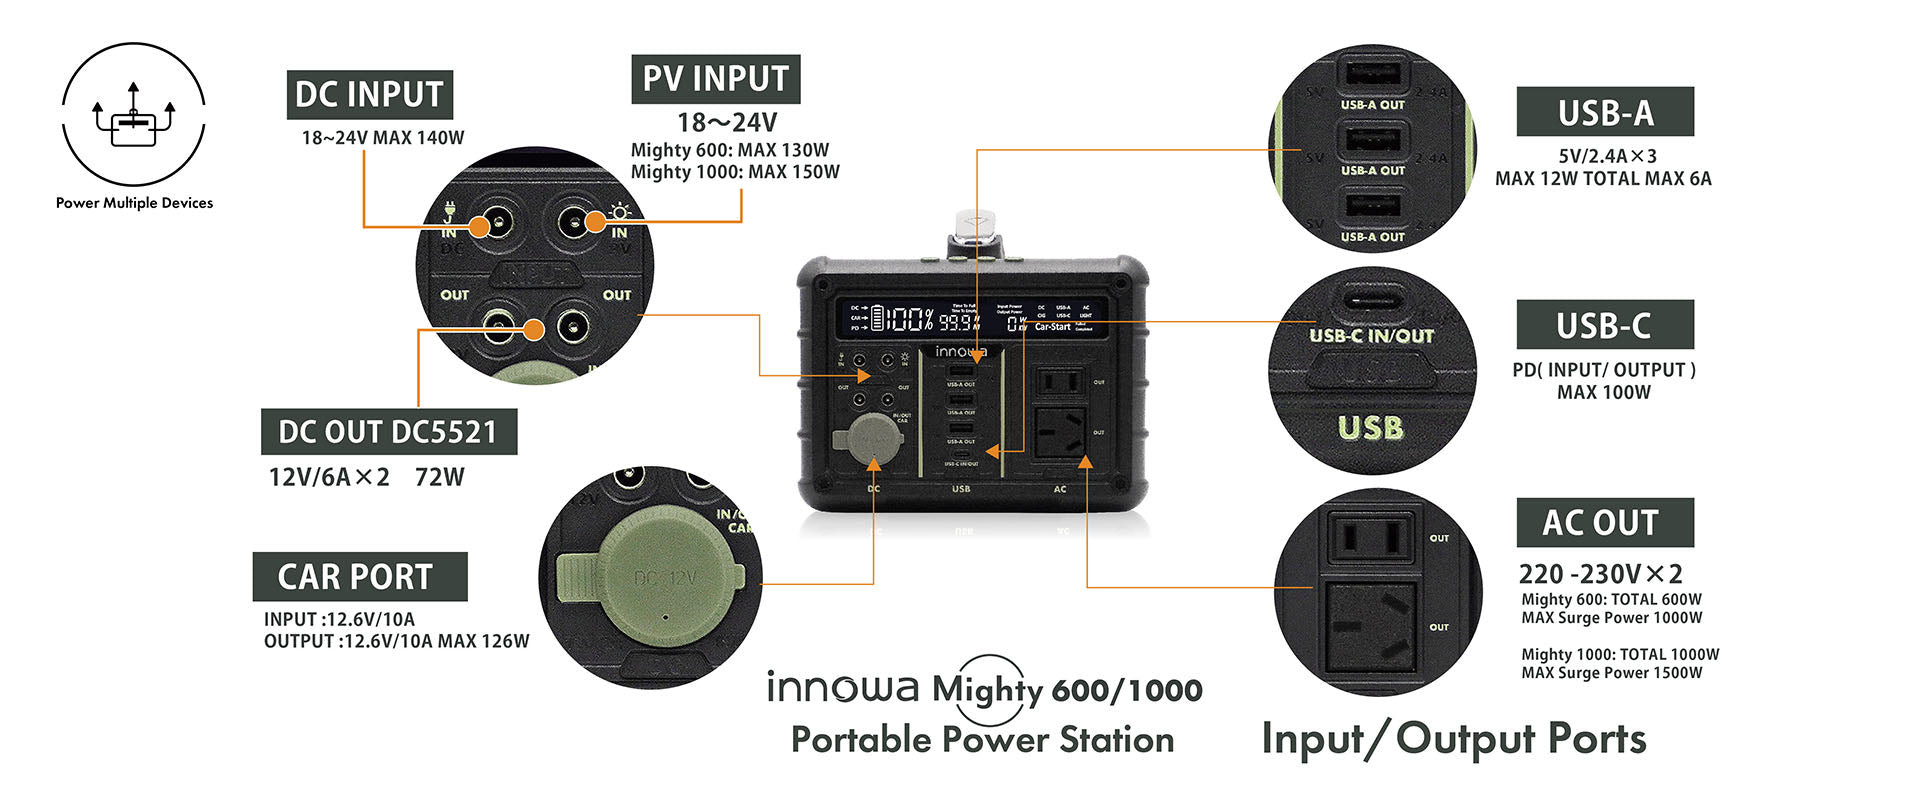 innowa Mighty 1000 Portable Power Station